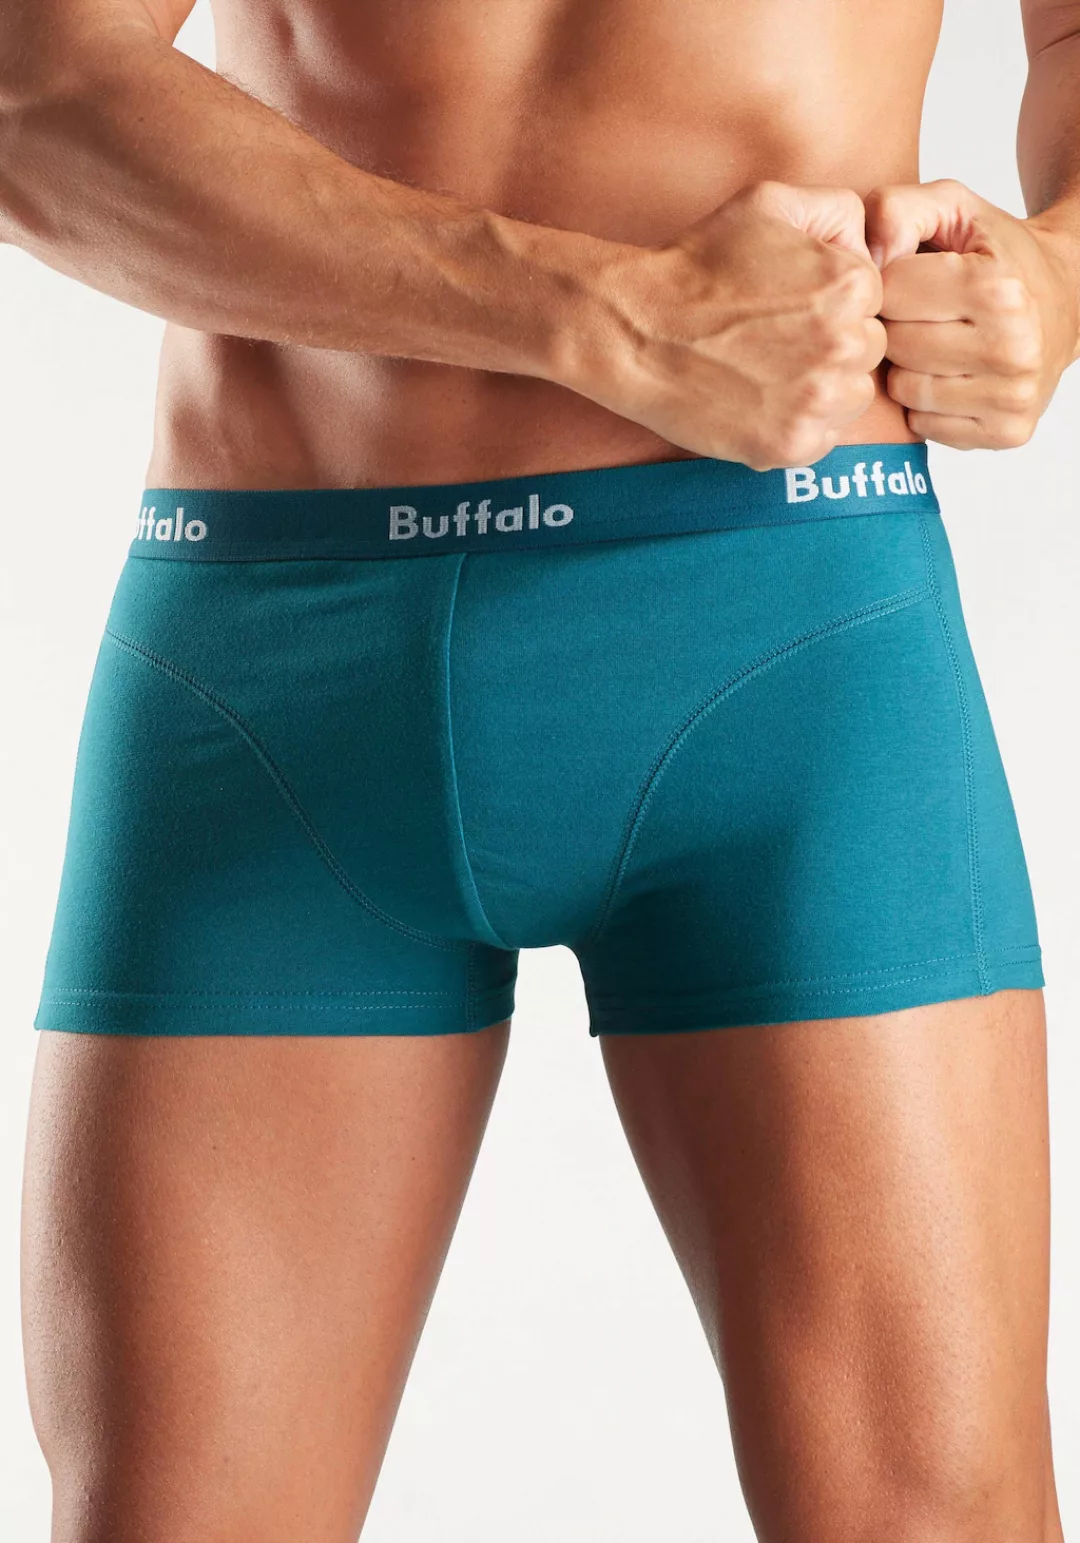 Buffalo Hipster, (Packung, 3 St.) günstig online kaufen